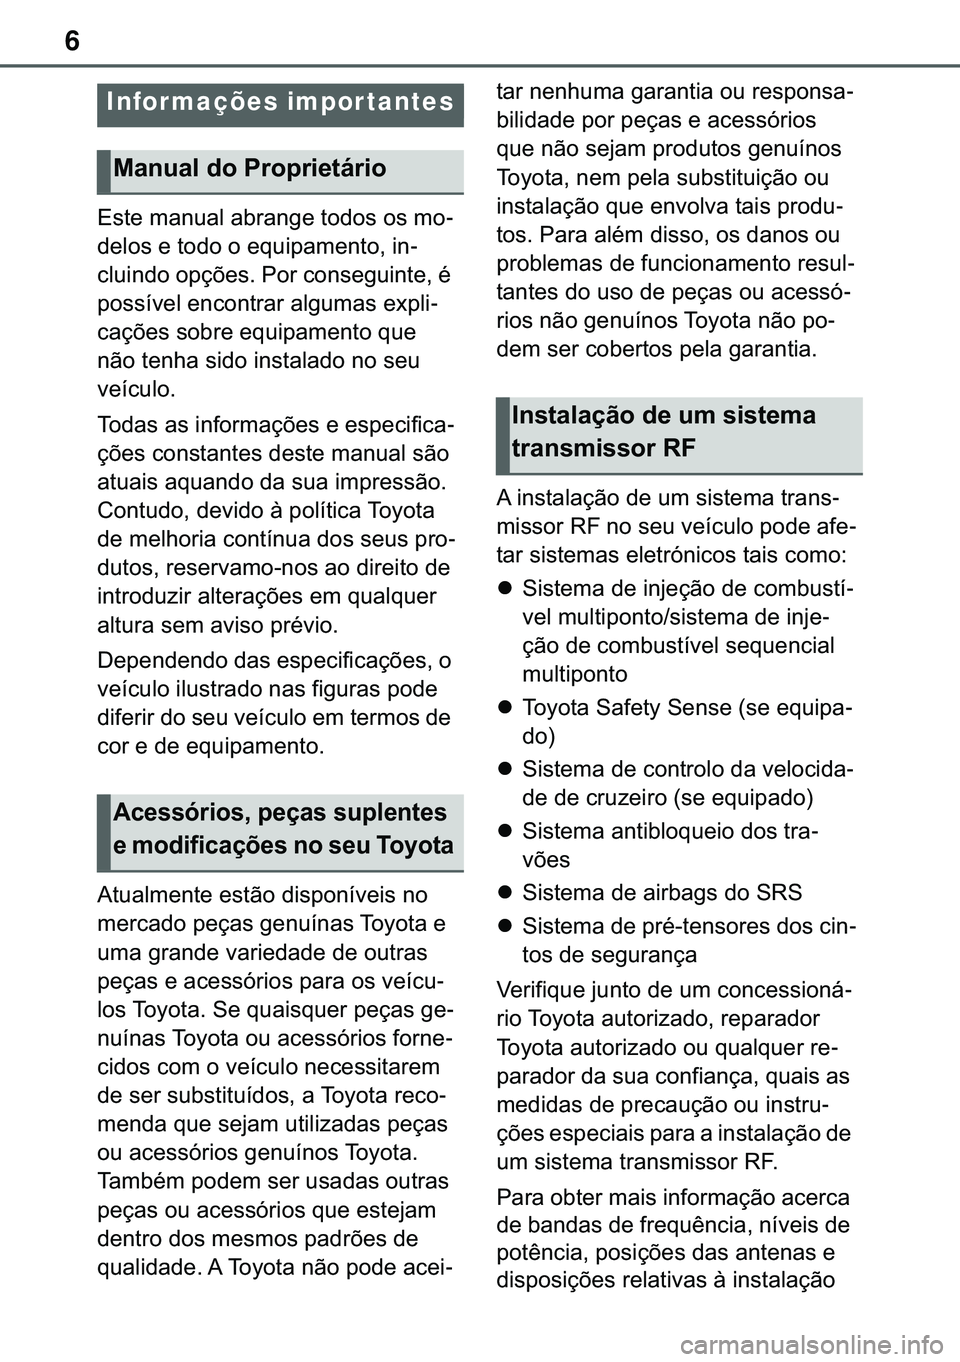 TOYOTA COROLLA 2021  Manual de utilização (in Portuguese) 6
�&�2�5�2�/�/�$ �+�9 �7�0�0�7 �(�(
�(�V�W�H��P�D�Q�X�D�O��D�E�U�D�Q�J�H��W�R�G�R�V��R�V��P�R-
�G�H�O�R�V��H��W�R�G�R��R��H�T�X�L�S�D�P�H�Q�W�R���L�Q-
�F�O�X�L�Q�G�R��R�S�o�}�H�V���3�R�U